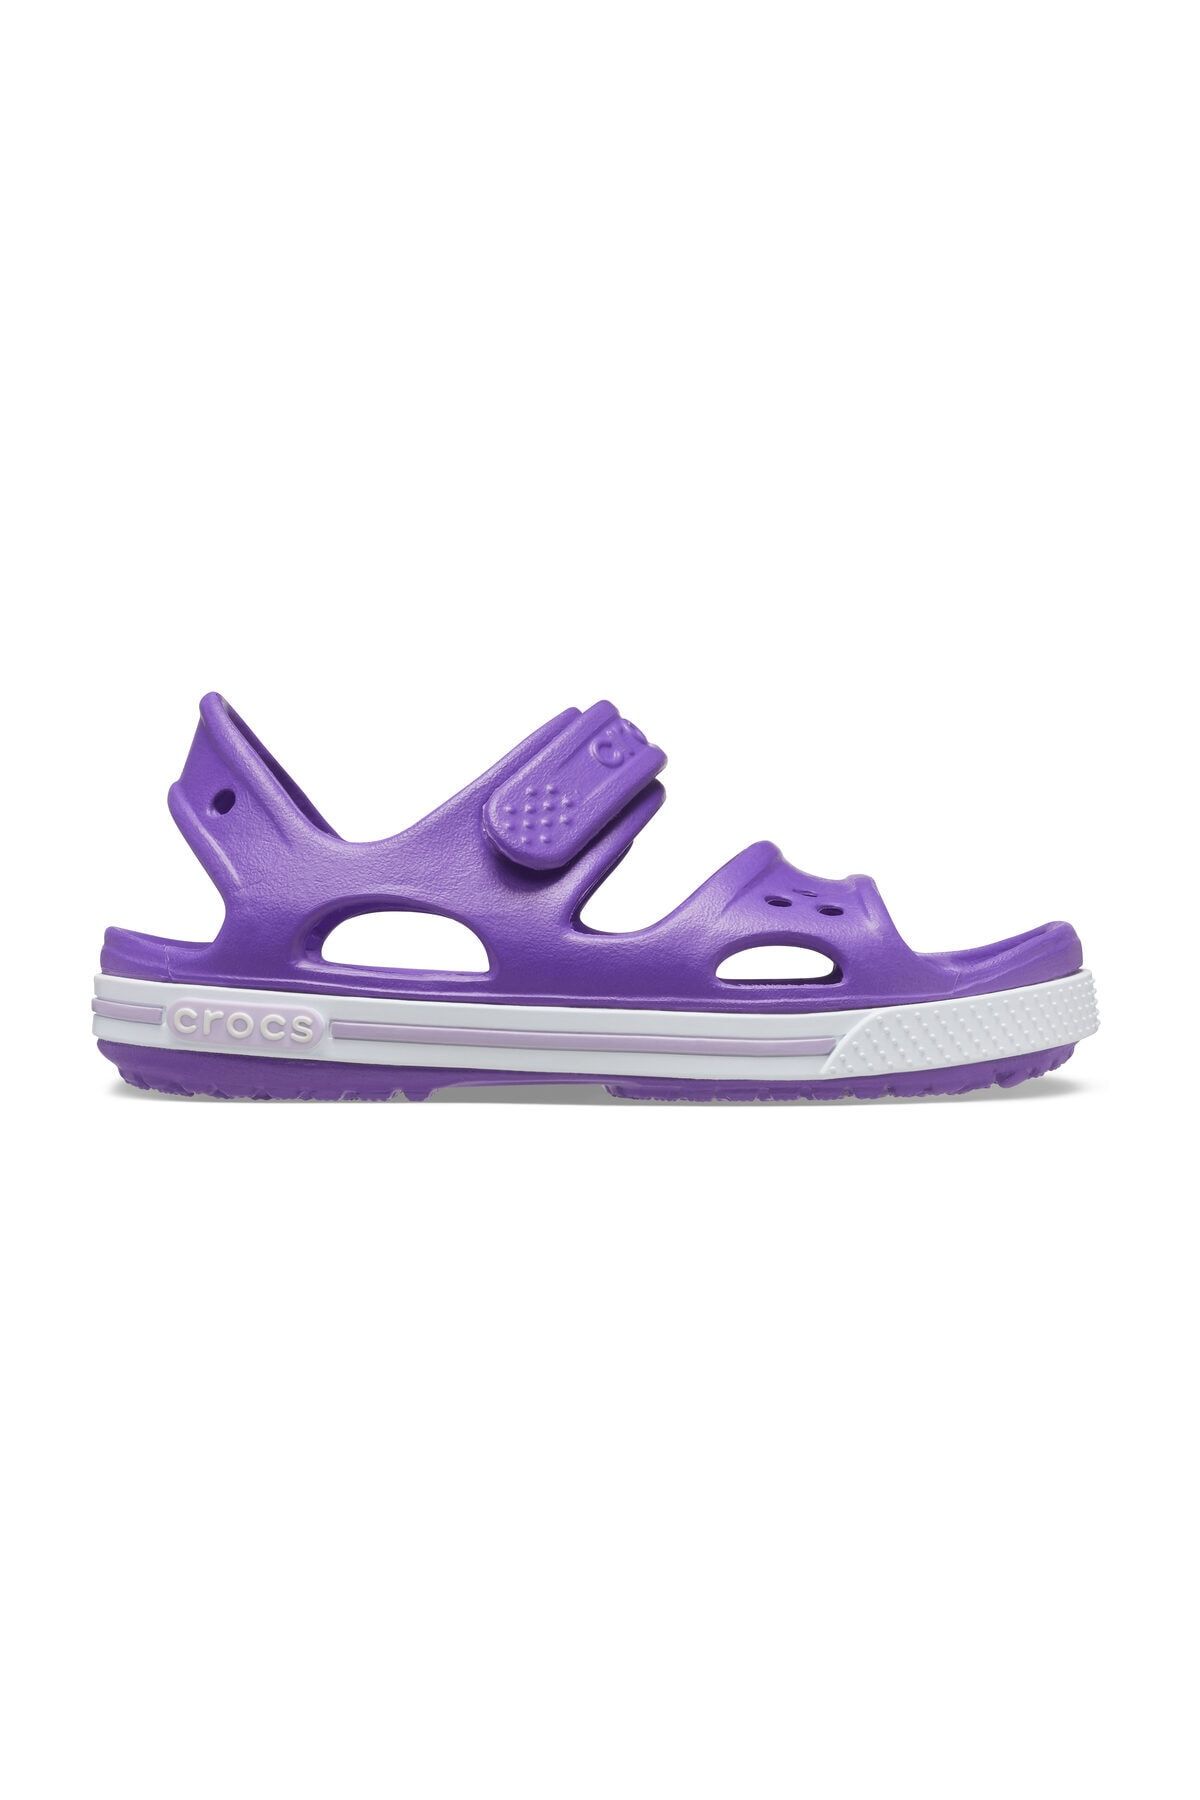 Crocs Crocband II Sandal PS Neon Mor Çocuk Sandalet Terlik